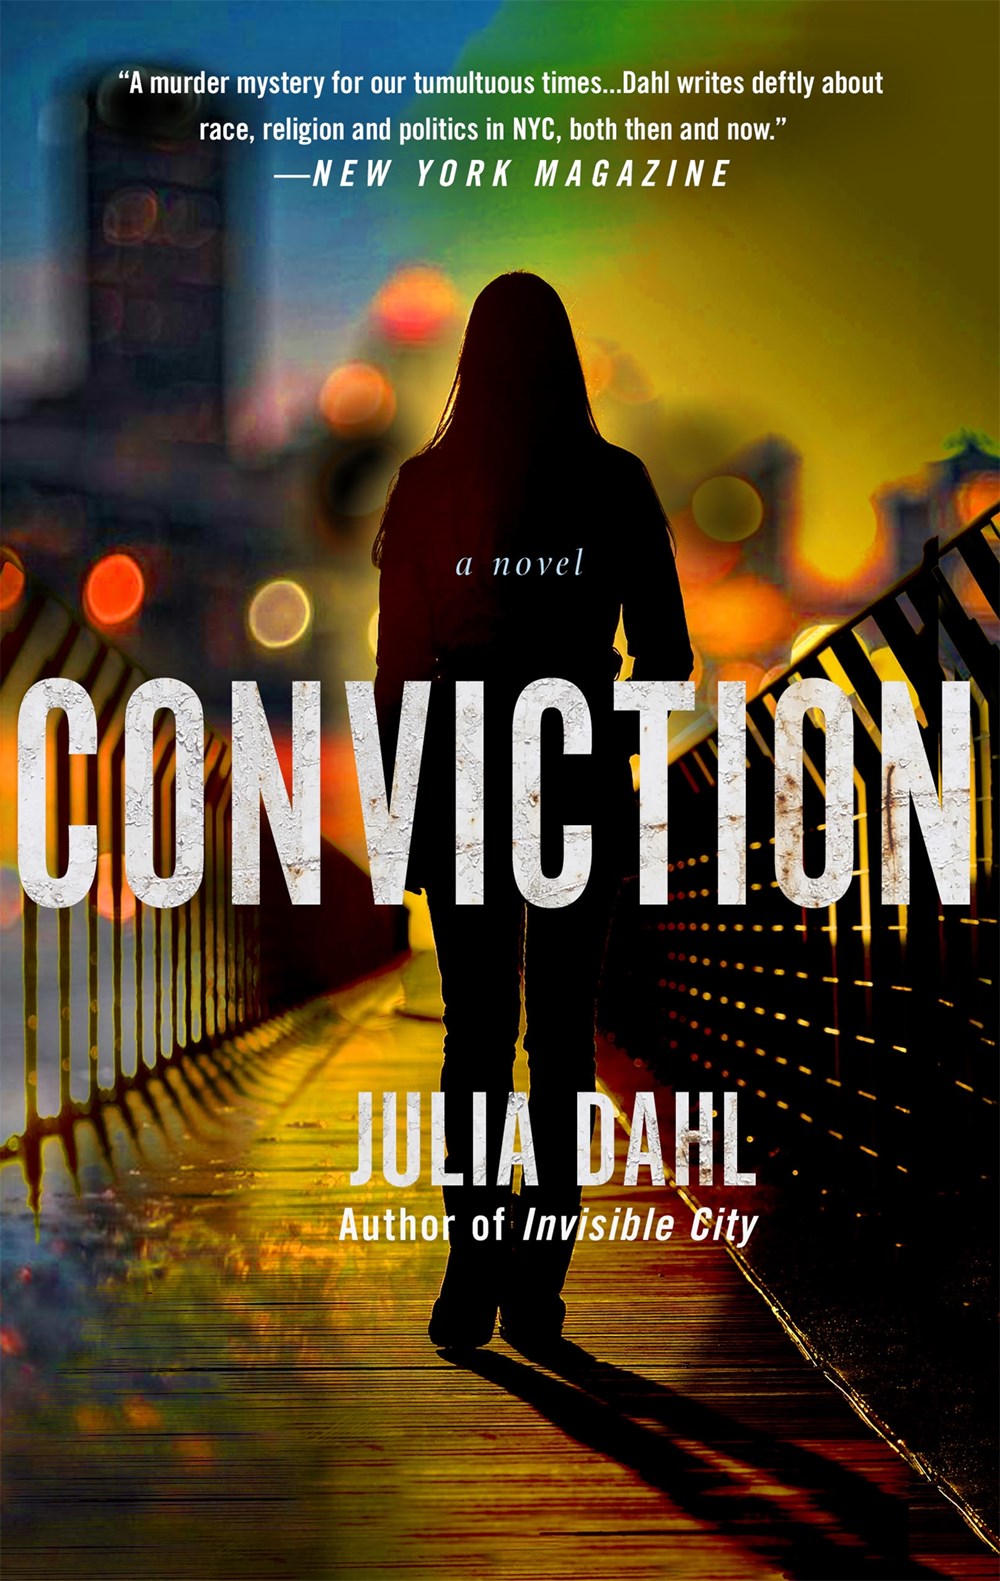 Conviction: A Novel by Julia Dahl (The Rebekah Roberts Series, Book 3)